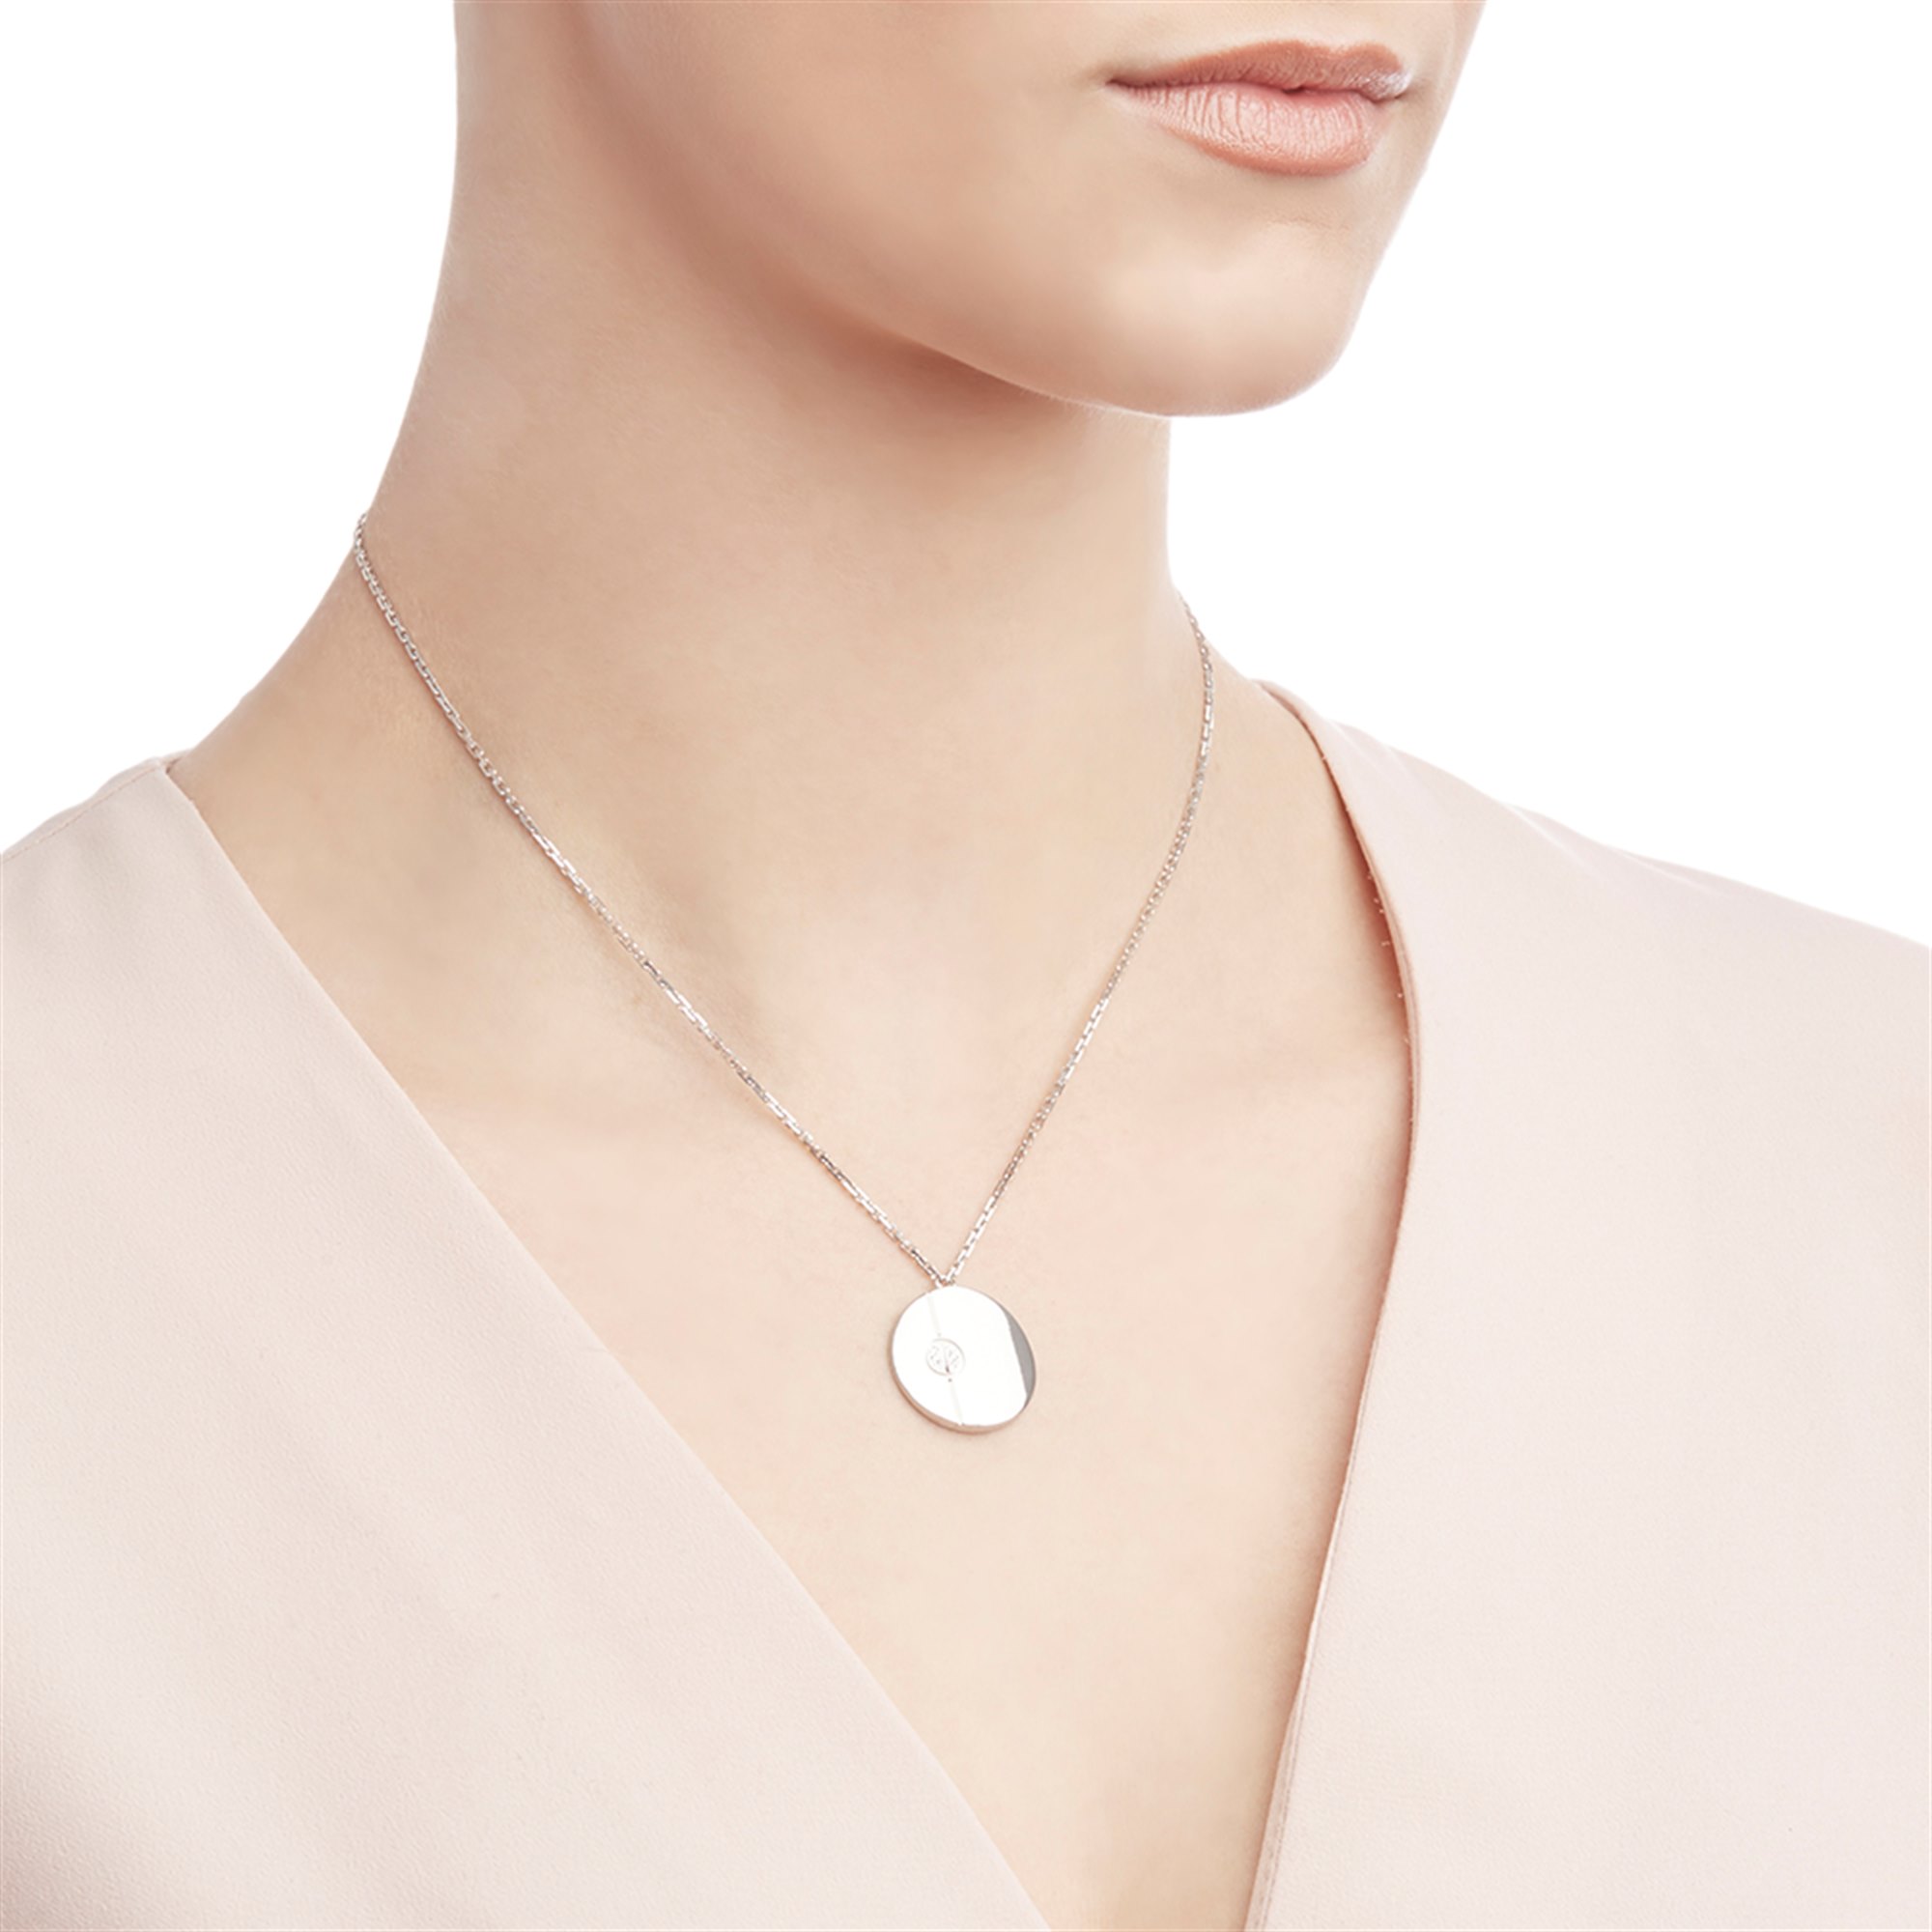 Cartier 18k White Gold Diamond Love Pendant Necklace